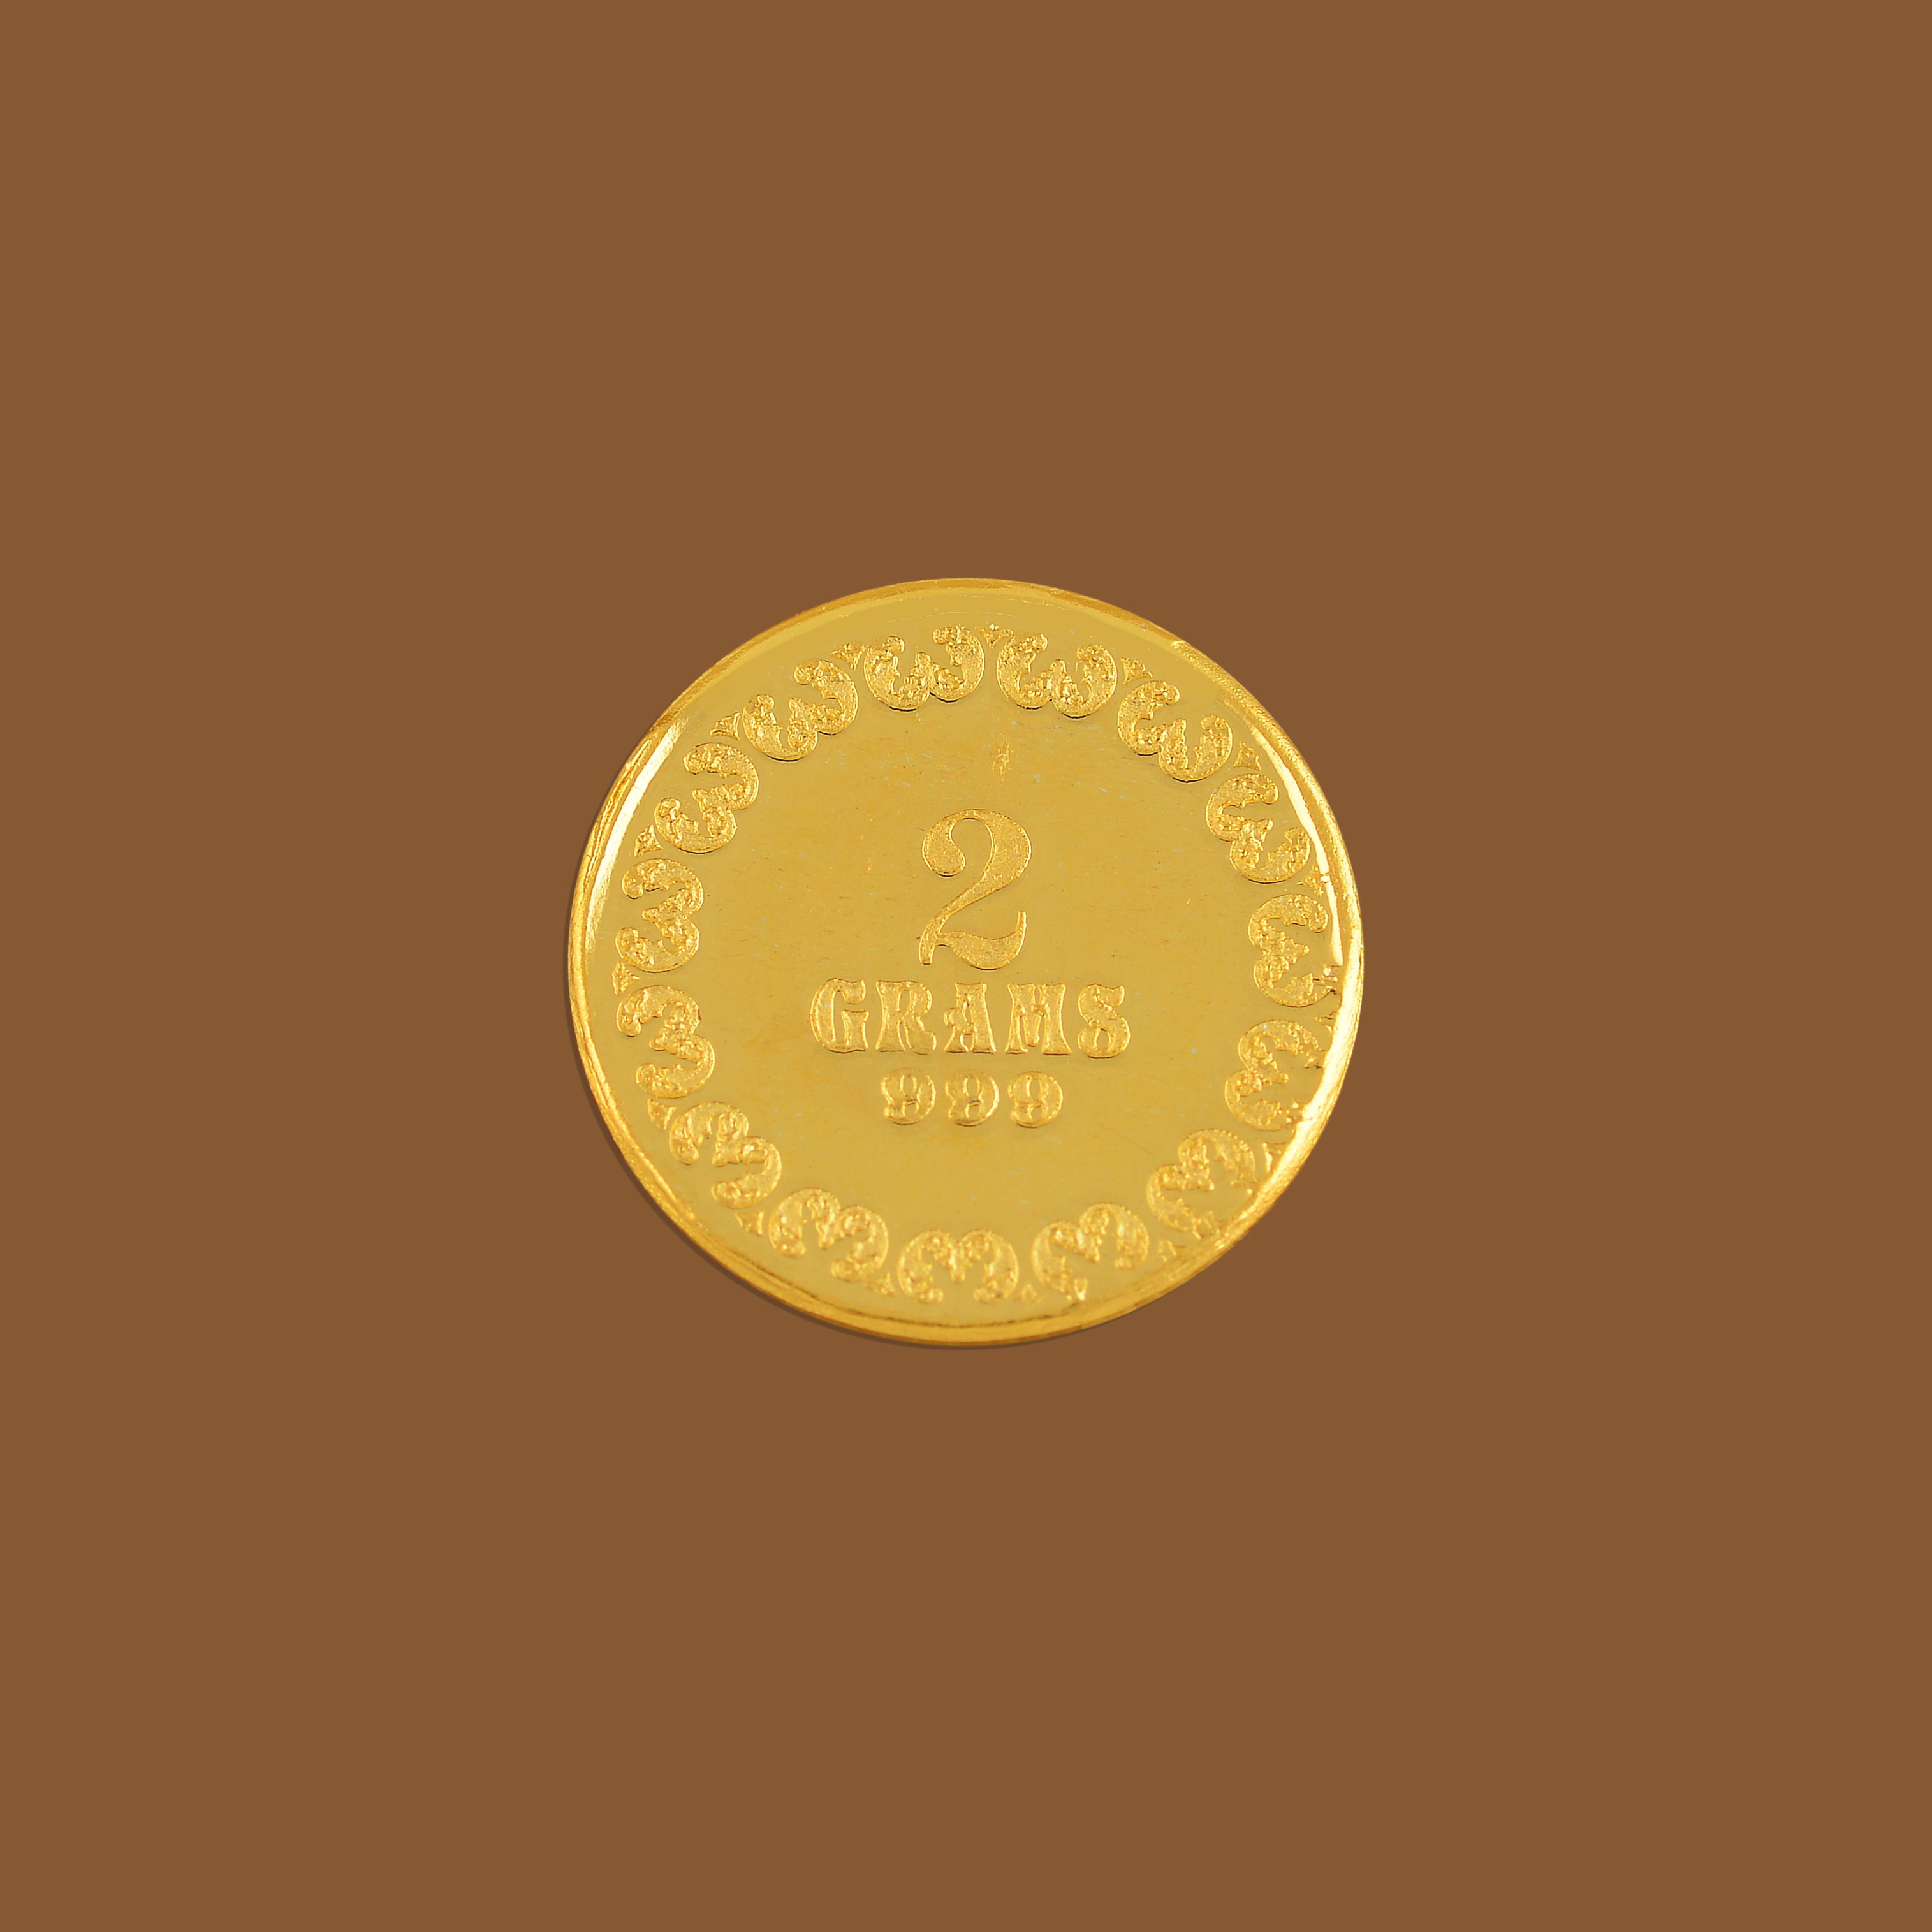 2 Gram Gold Coin With Lakshmi Motif